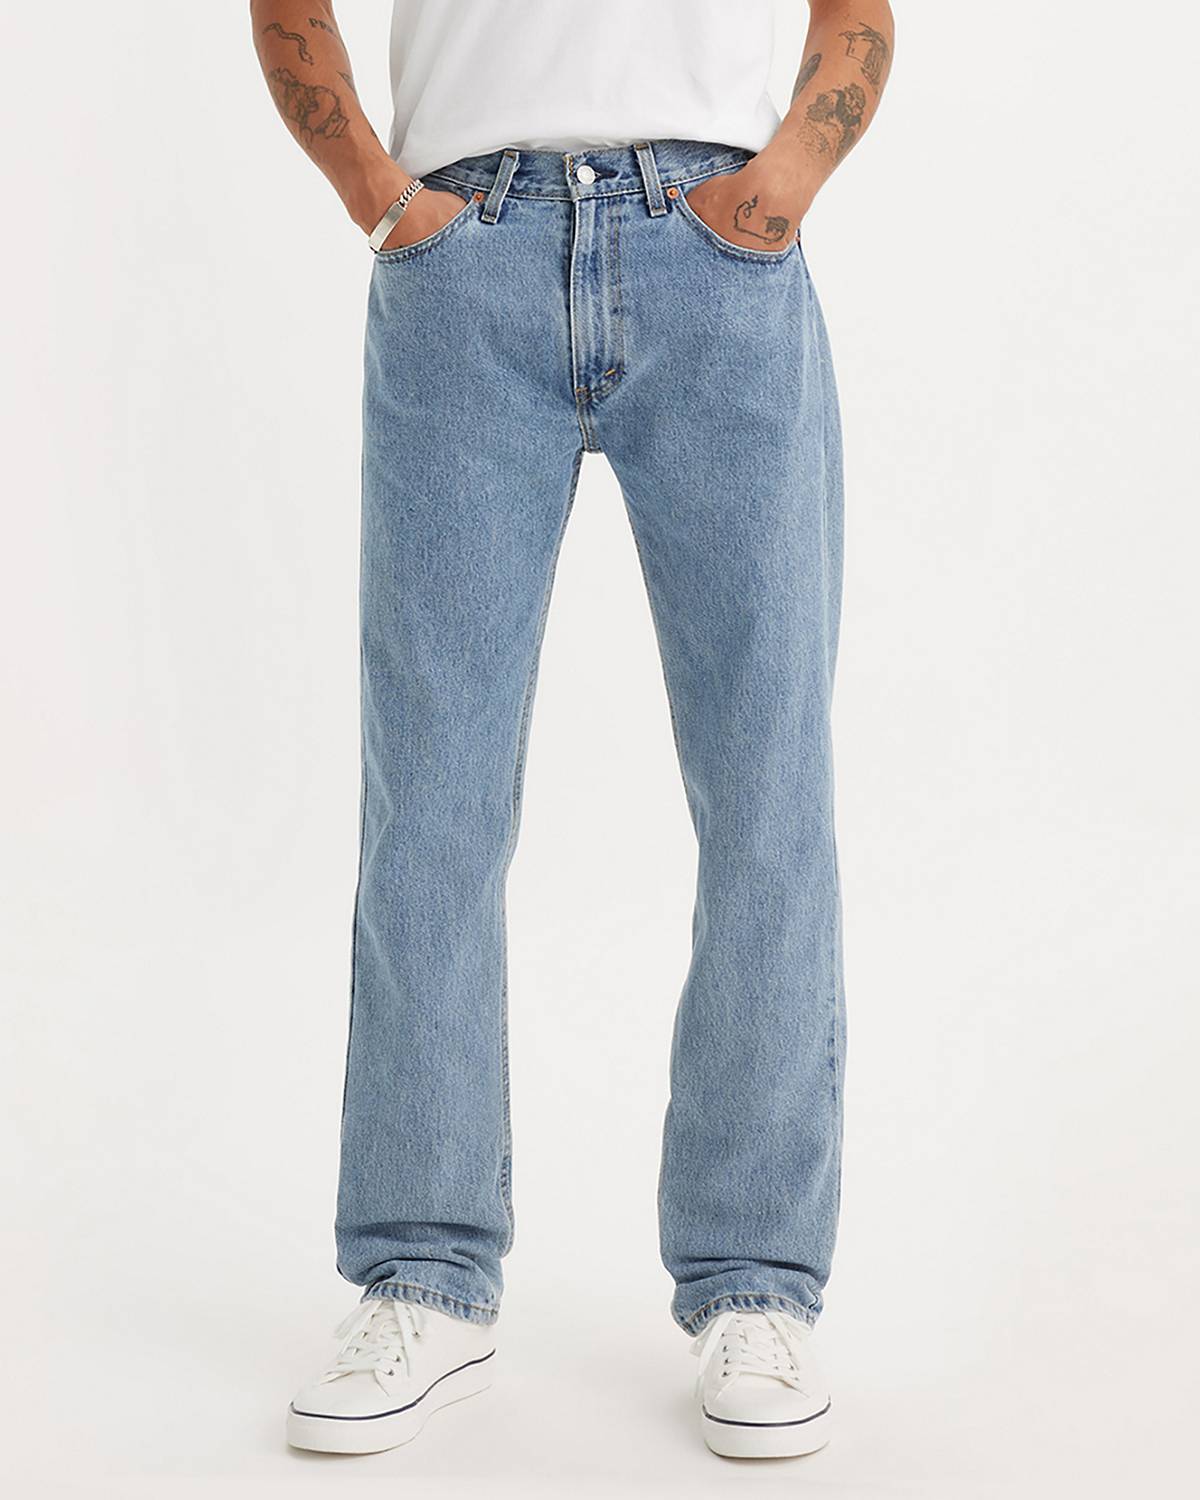 Male model wearing straight fit jeans.